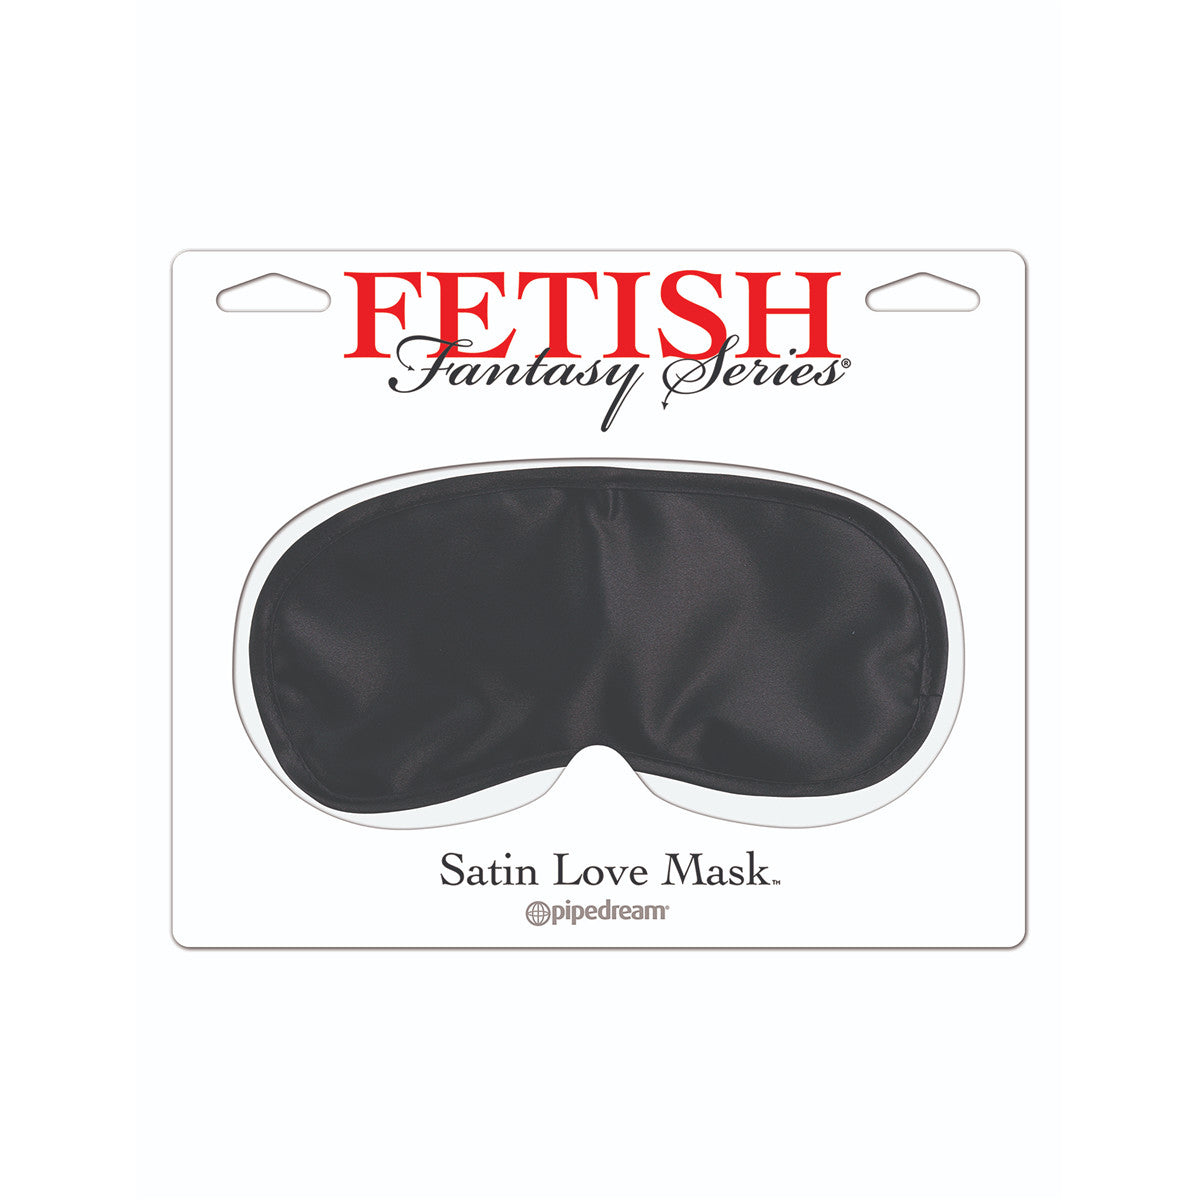 Fetish Fantasy Series Satin Love Mask - Black - Thorn & Feather